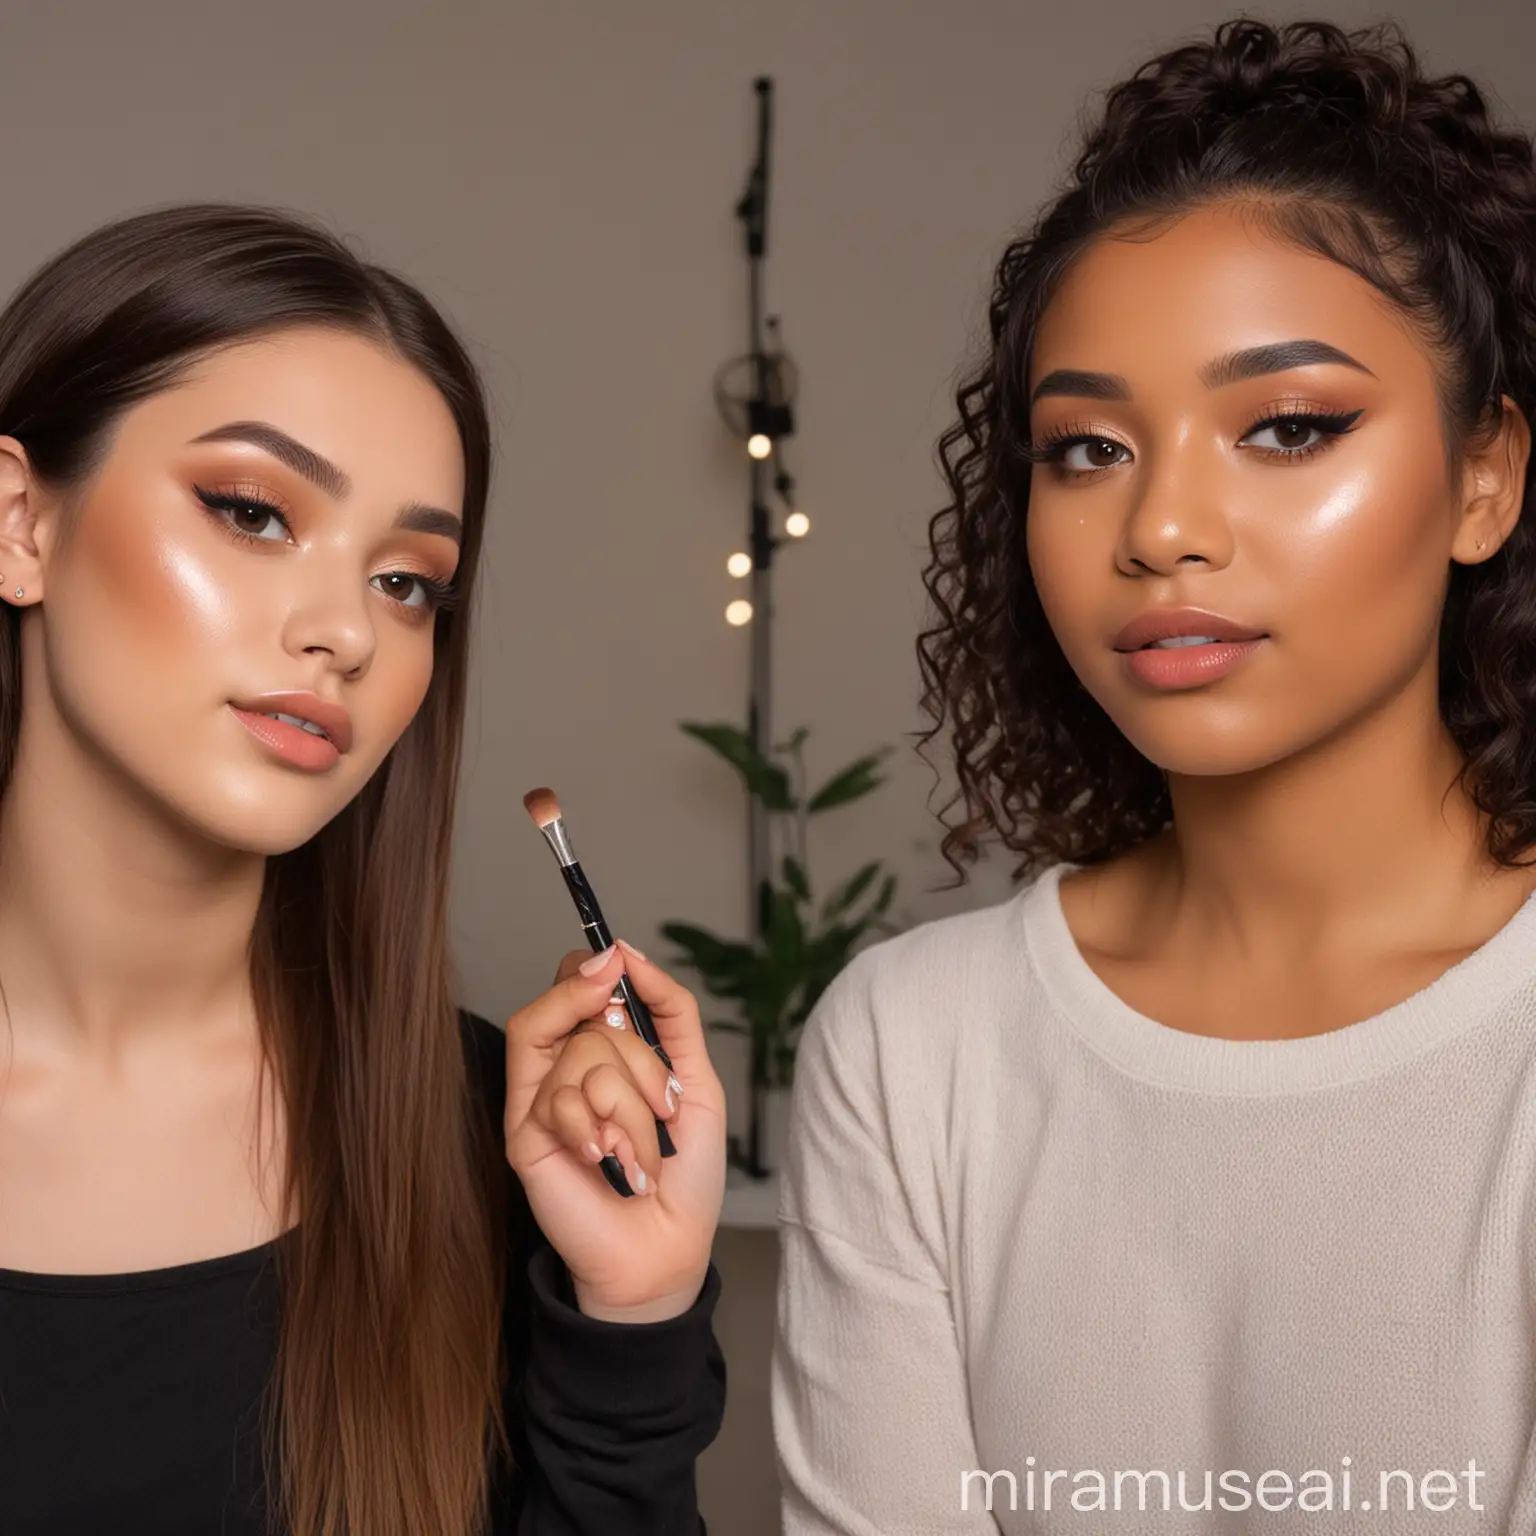 Diverse Duo Filming Makeup Tutorial for Social Media Fame